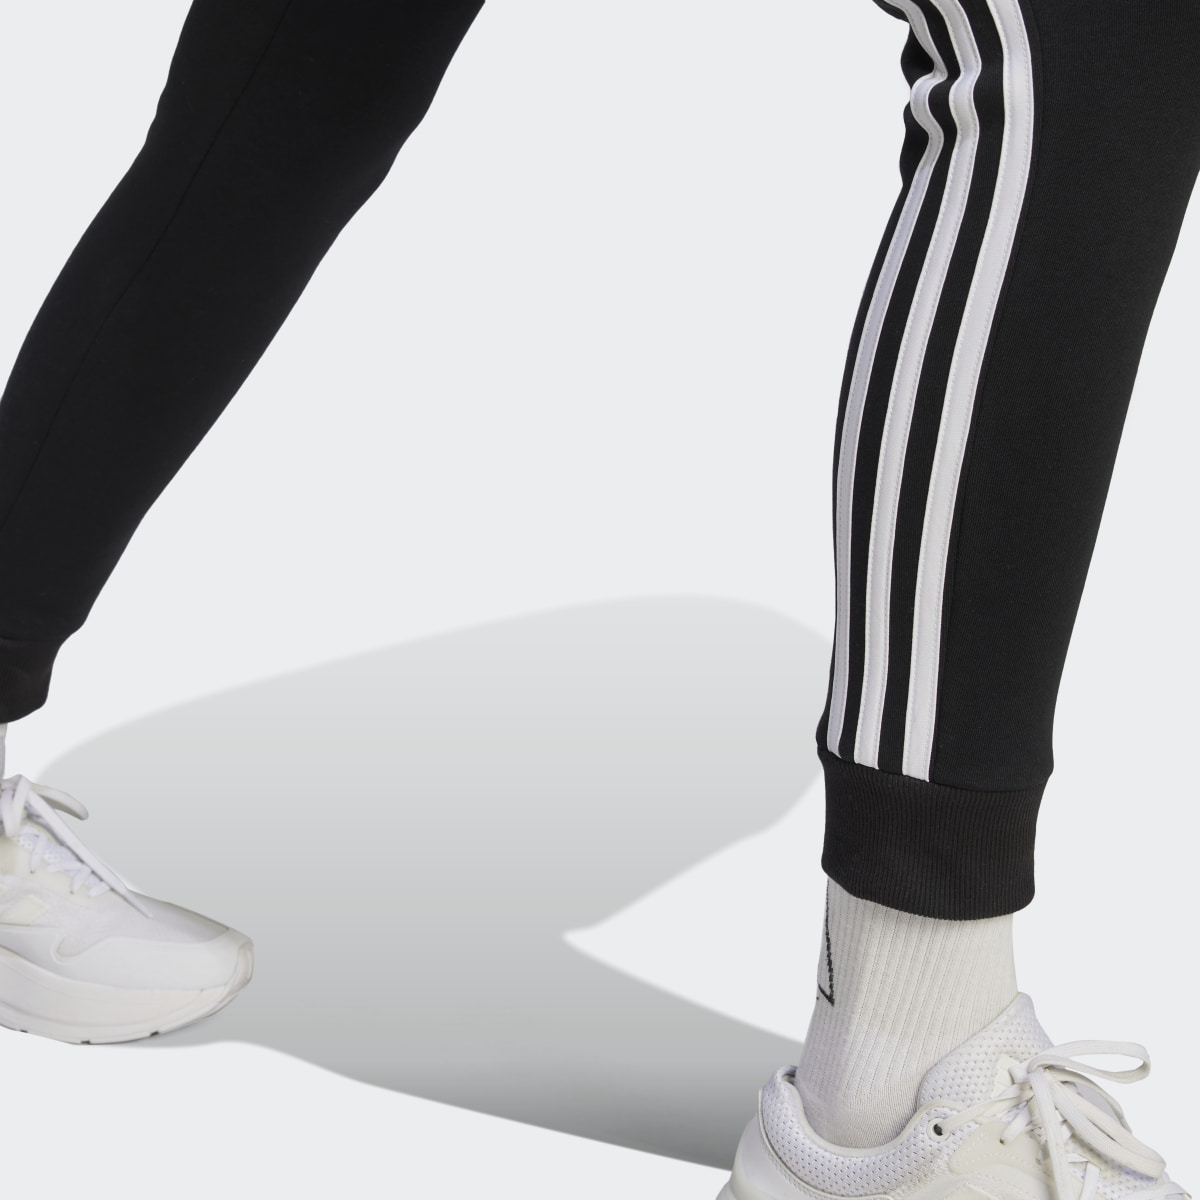 Adidas Essentials 3-Stripes Fleece Pants. 6